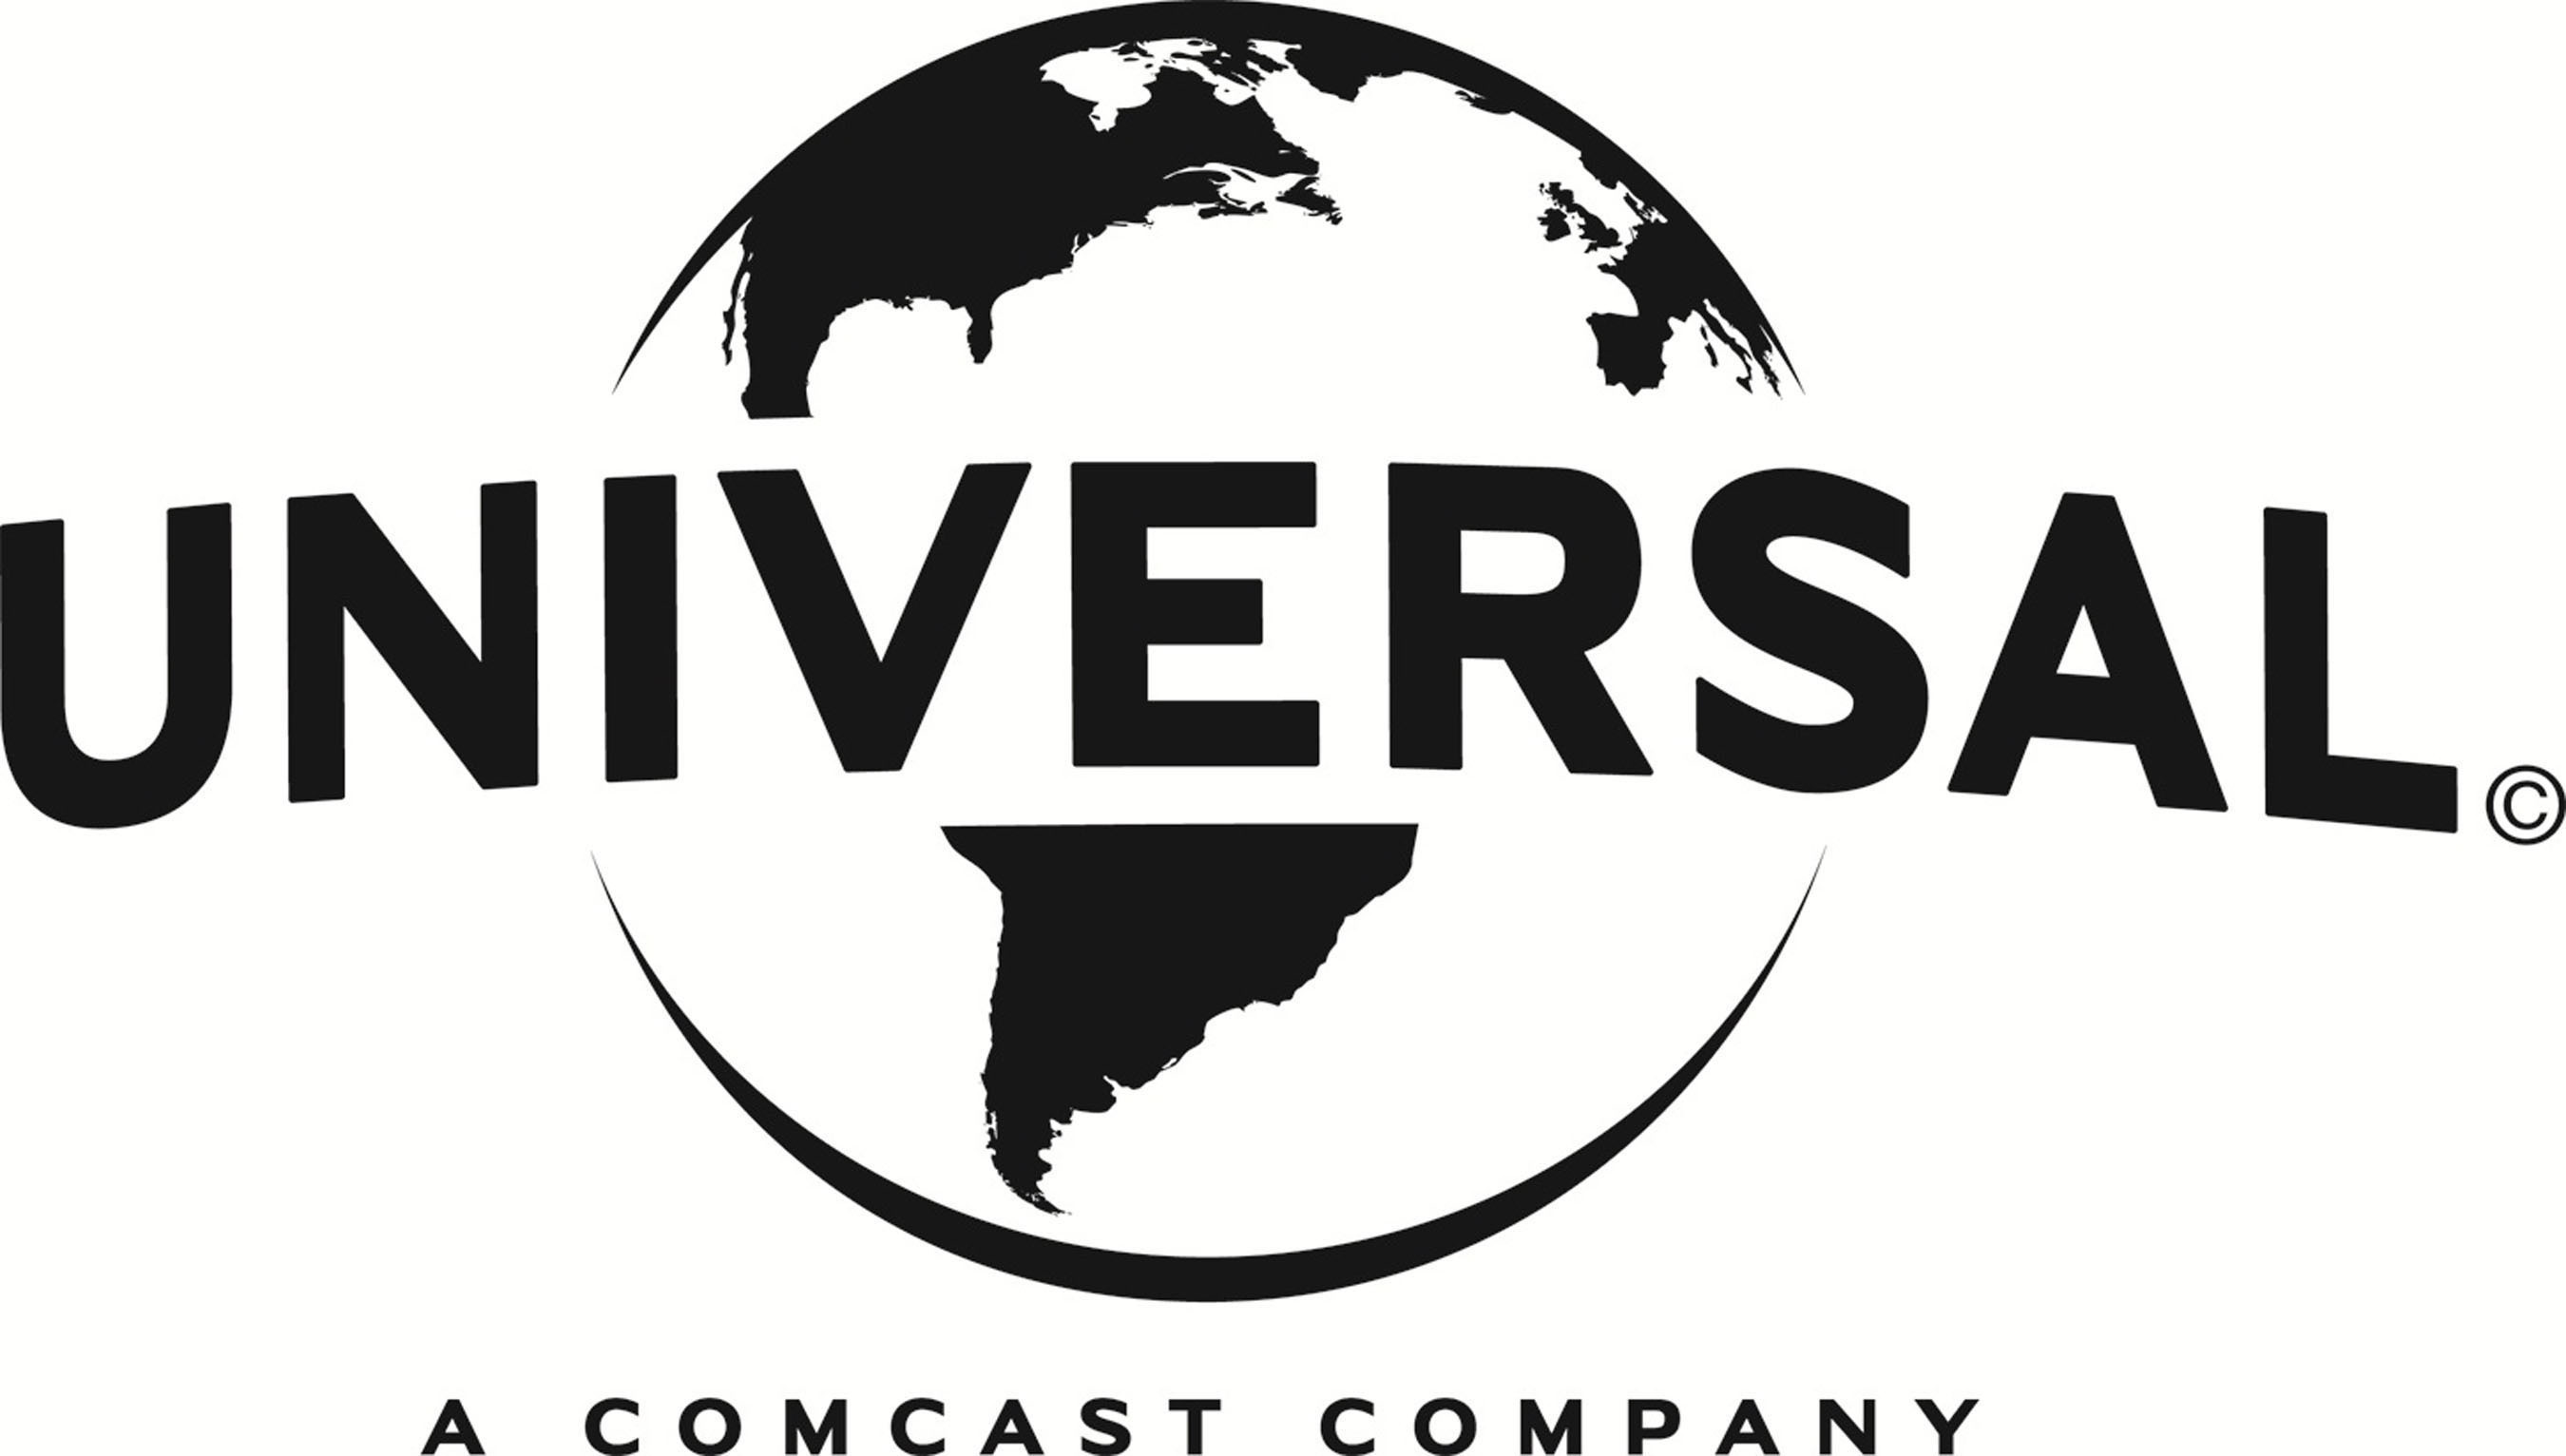 Universal Pictures logo. (PRNewsFoto/Universal Pictures) (PRNewsFoto/)